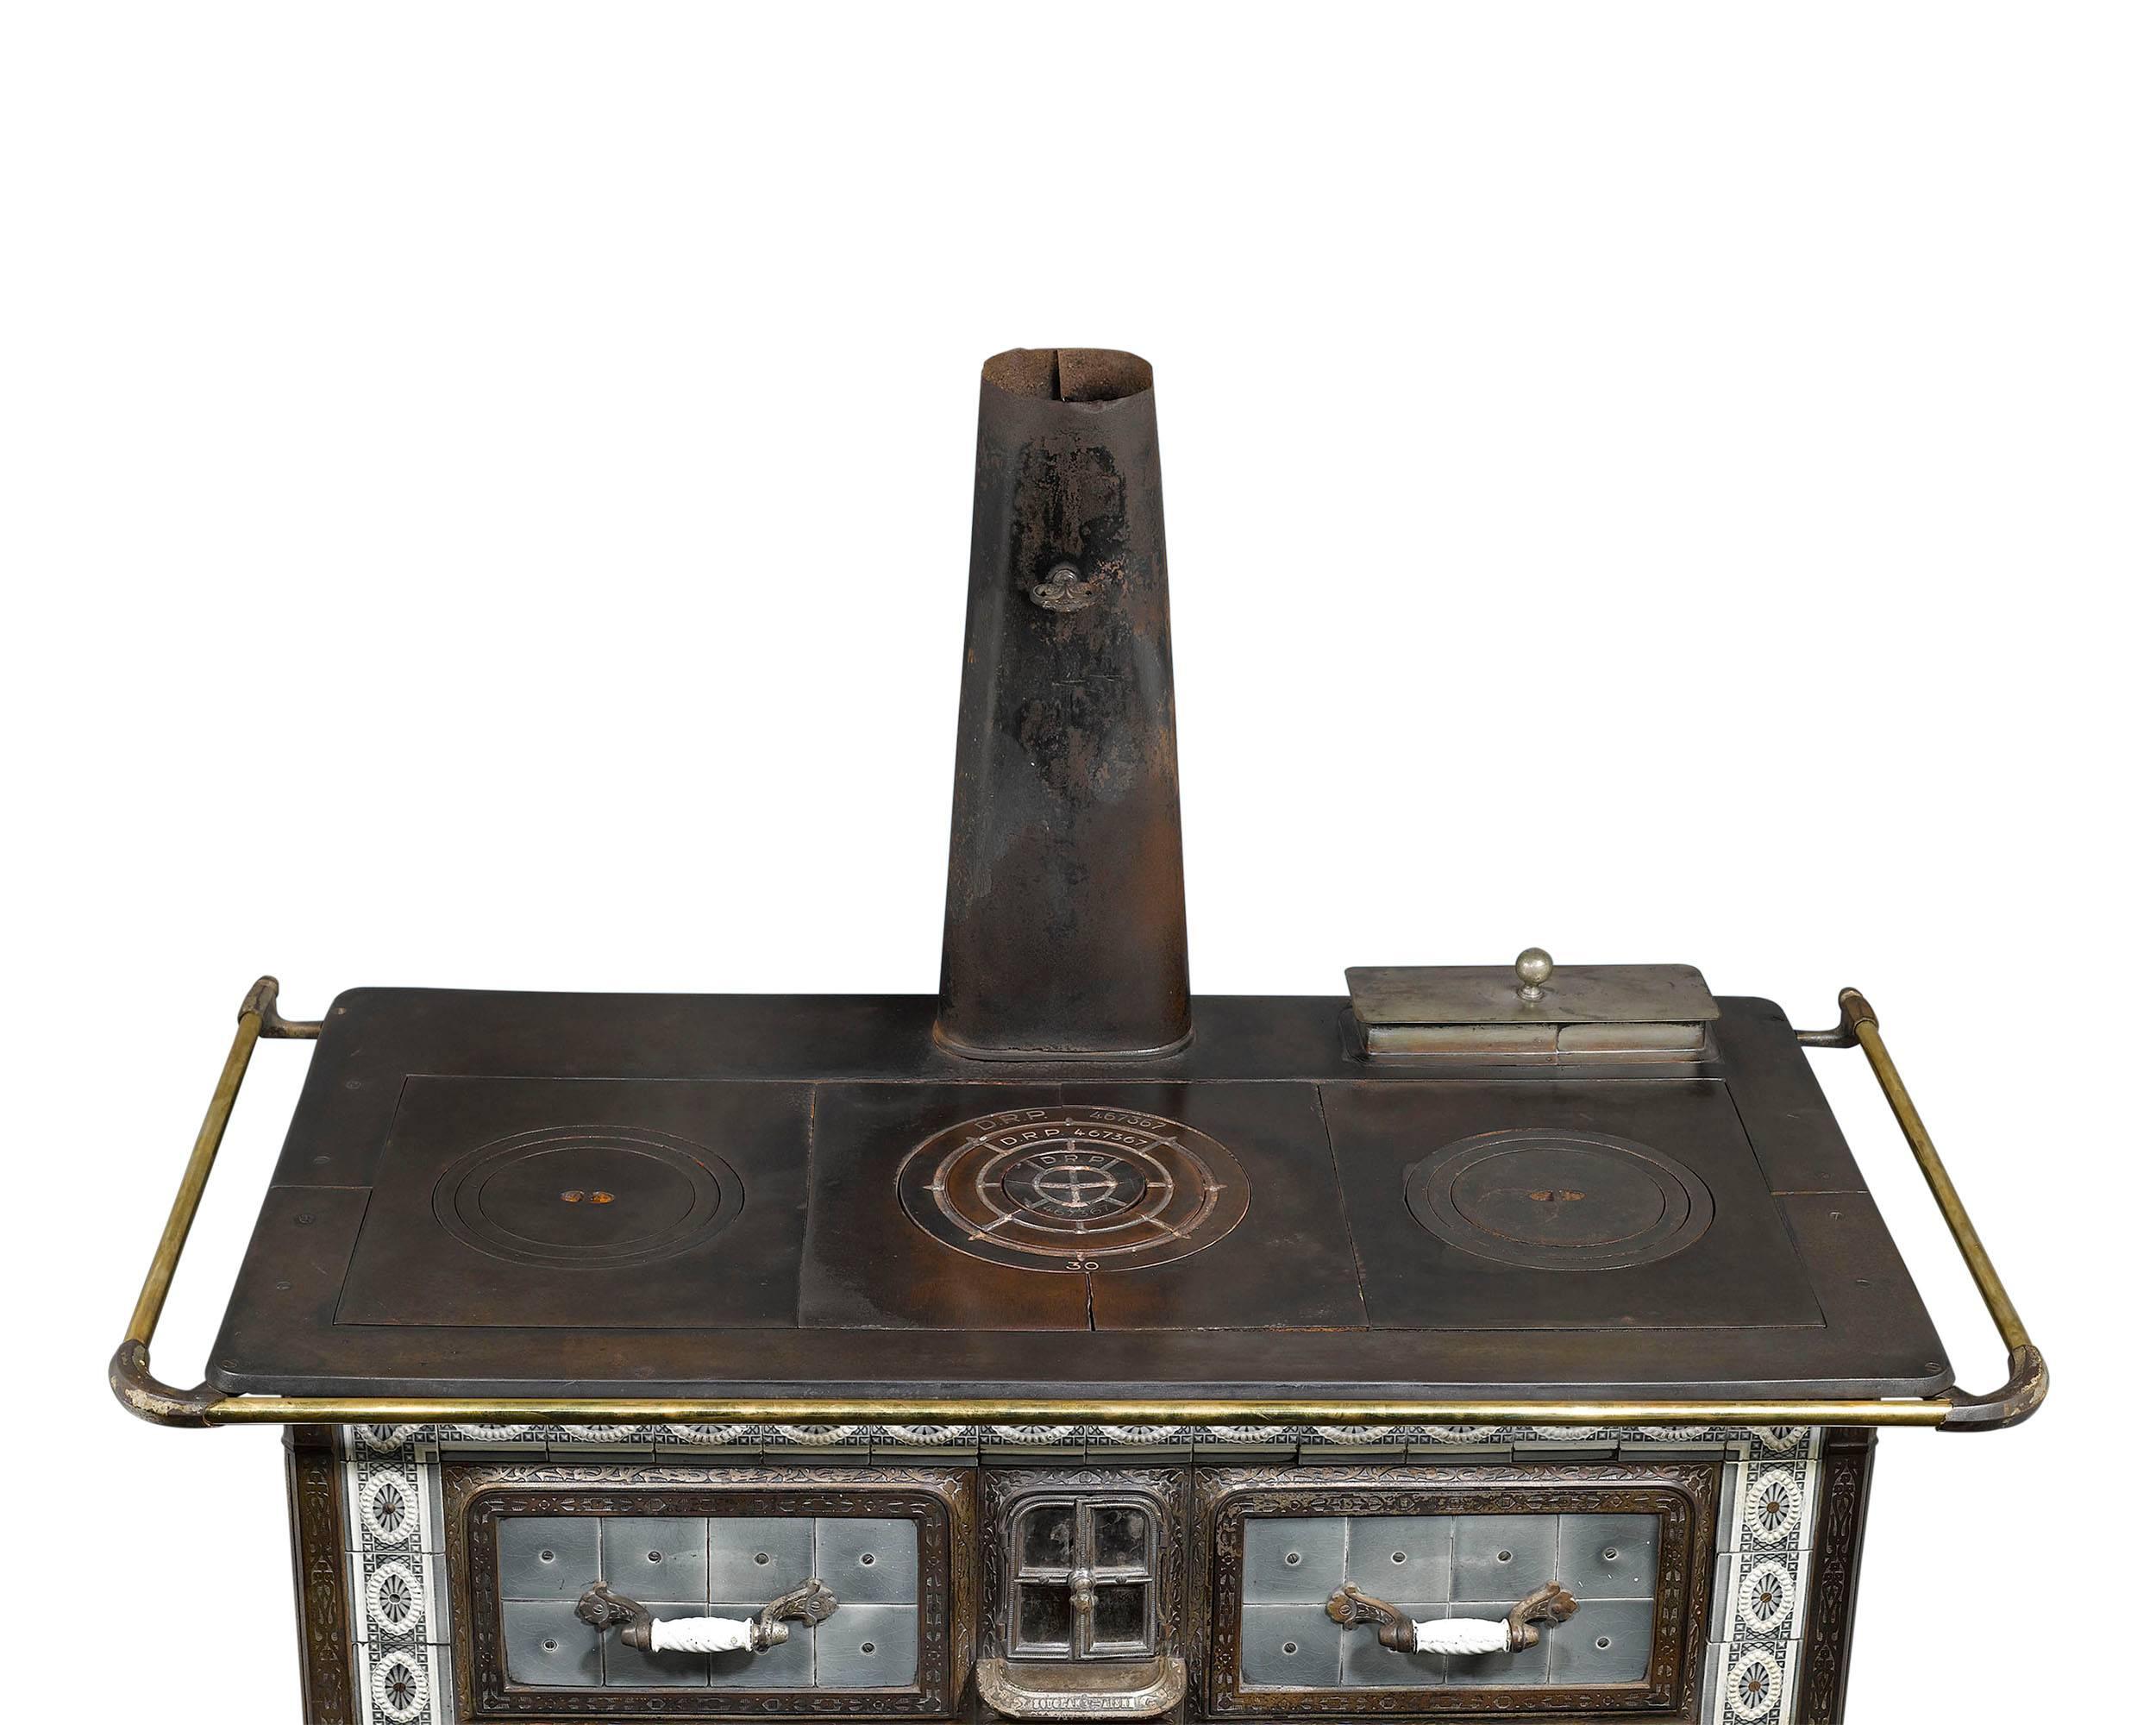 19th century stove